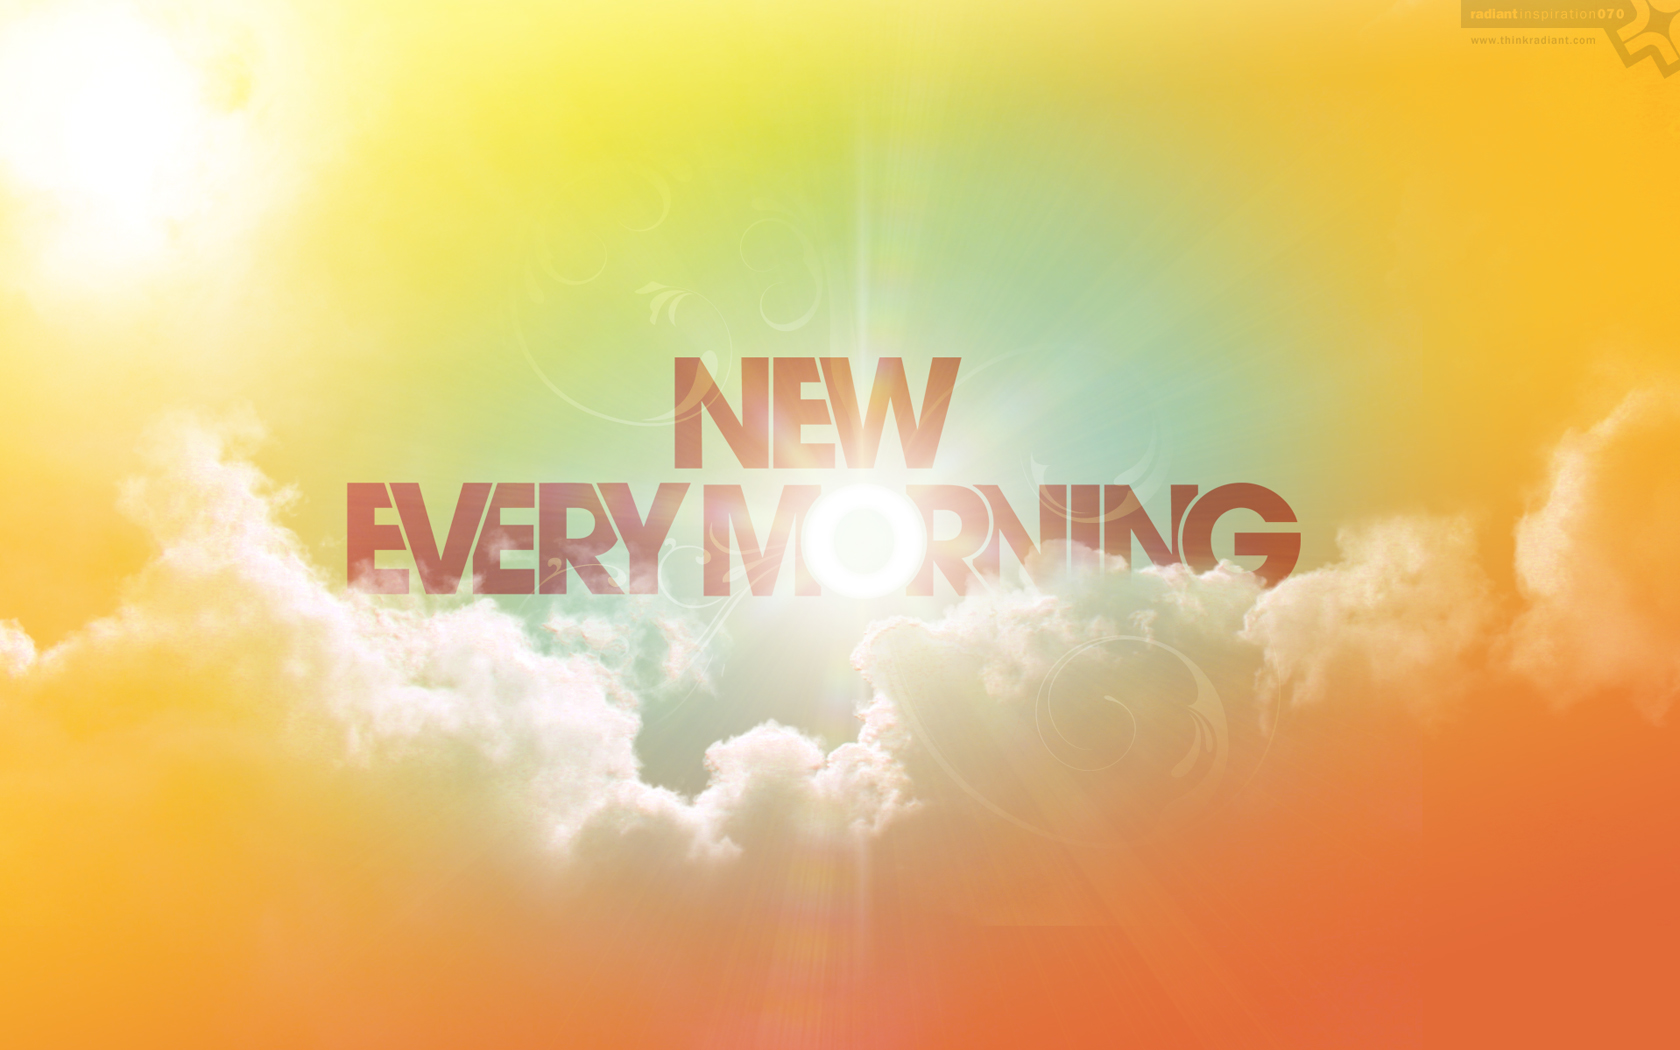 New Every Morning.jpg